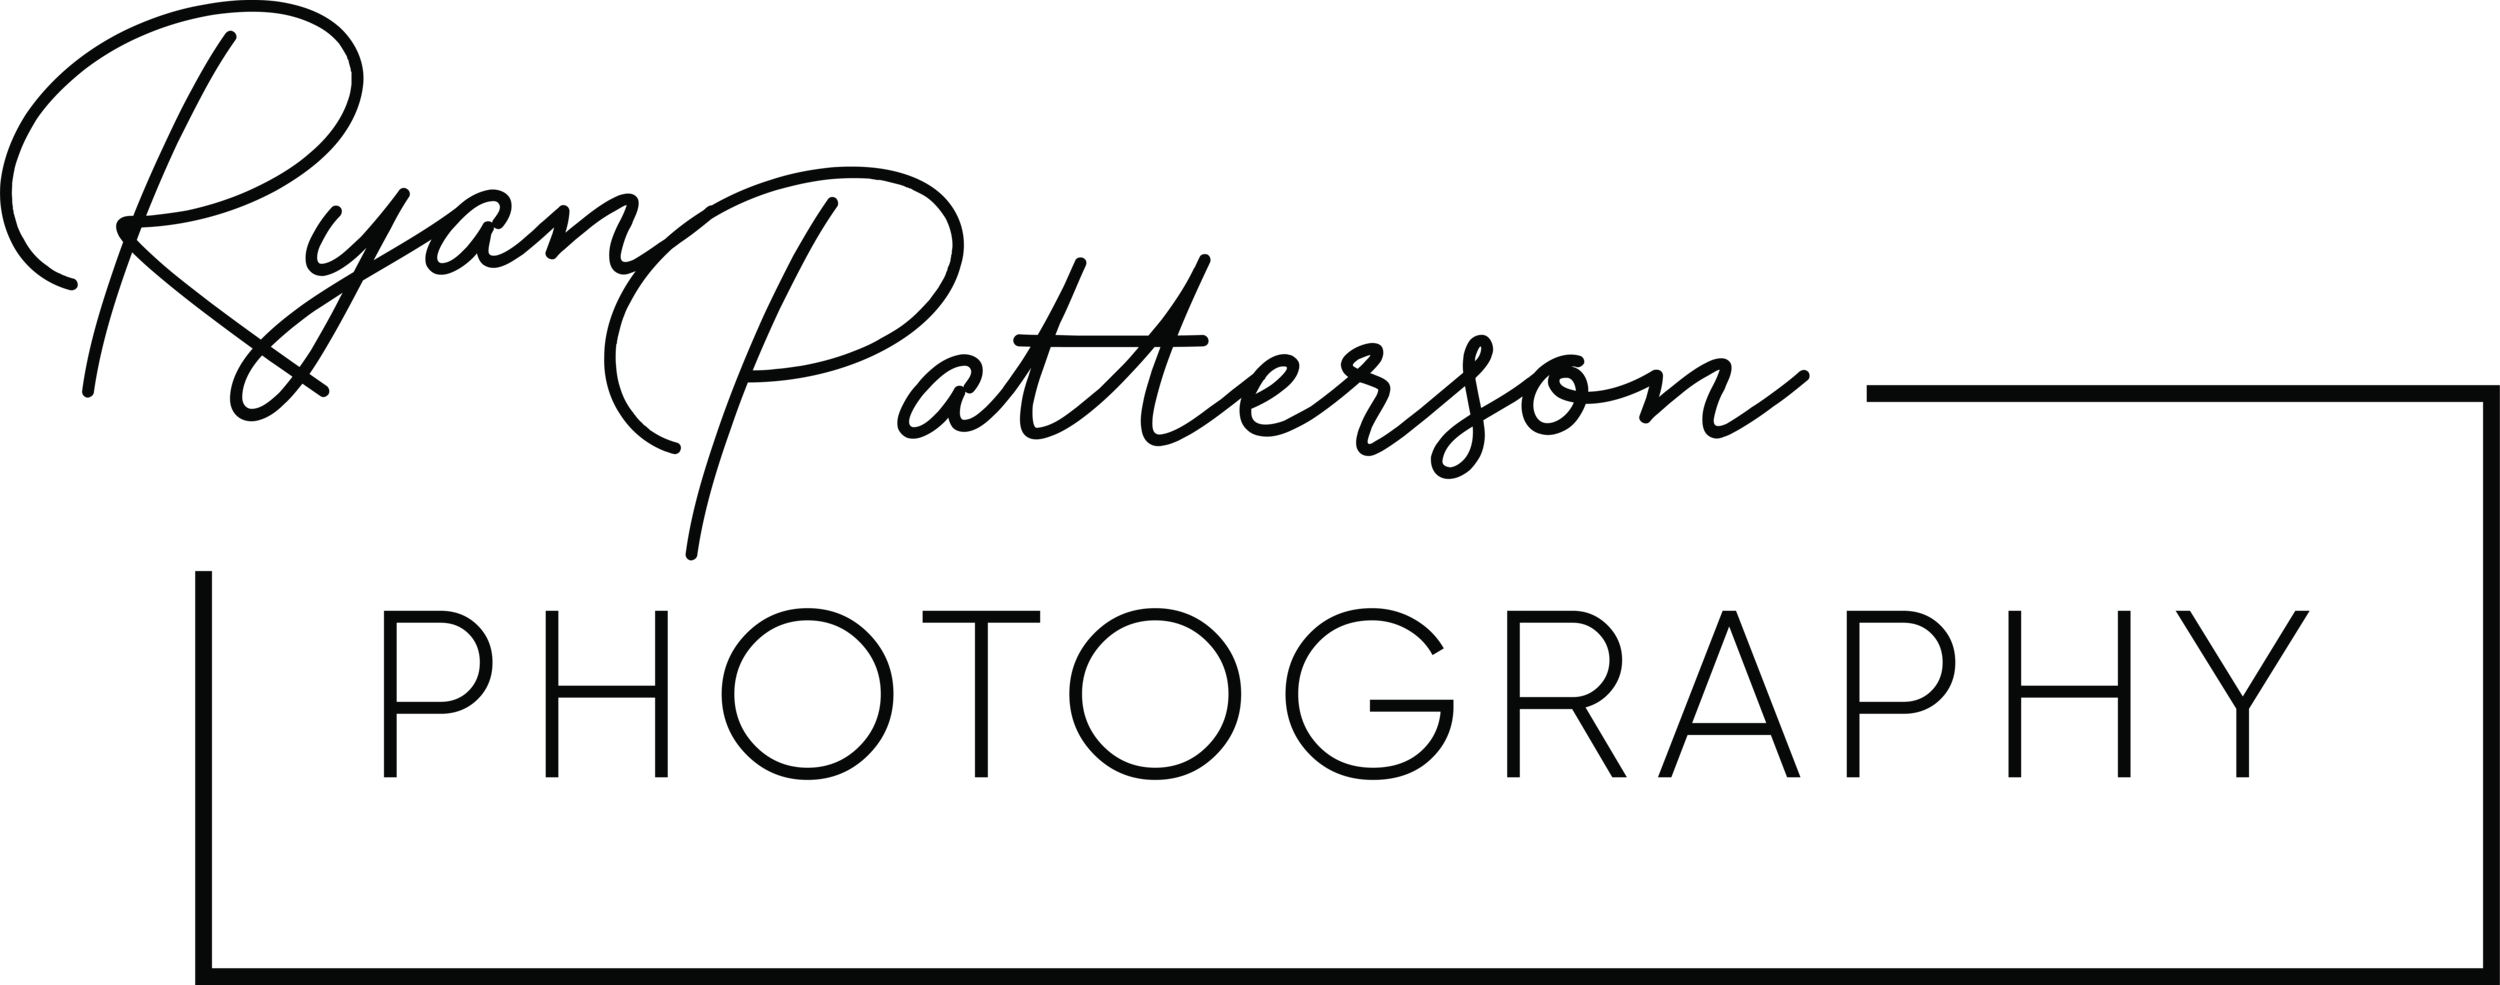 Ryan Patterson Photography